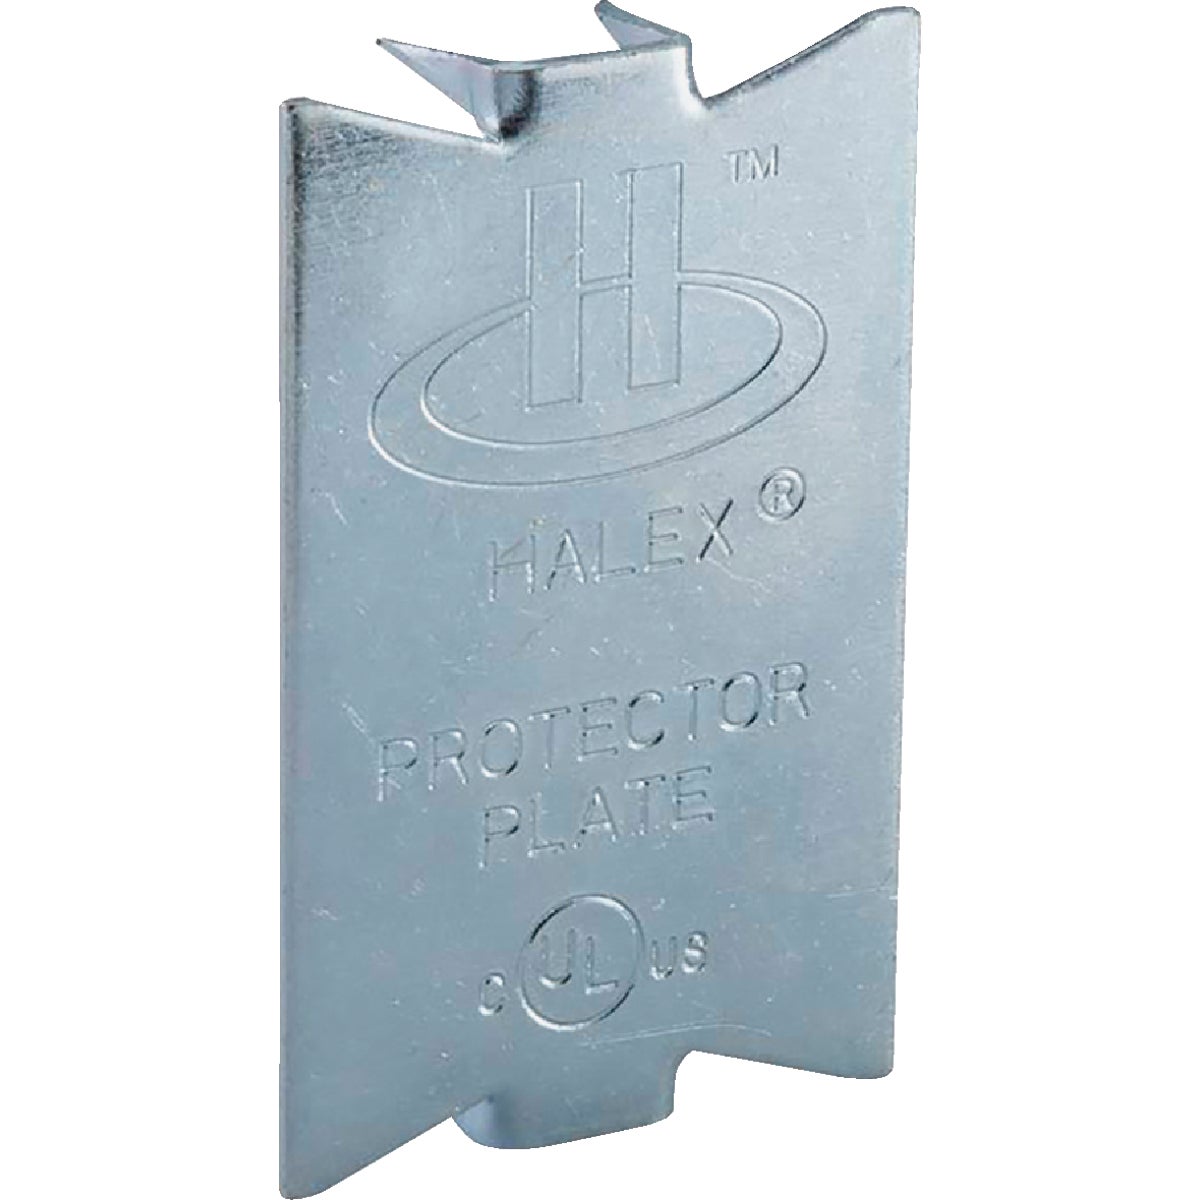 Halex 1-1/2 In. x 5 In. Steel Nail Box Plate